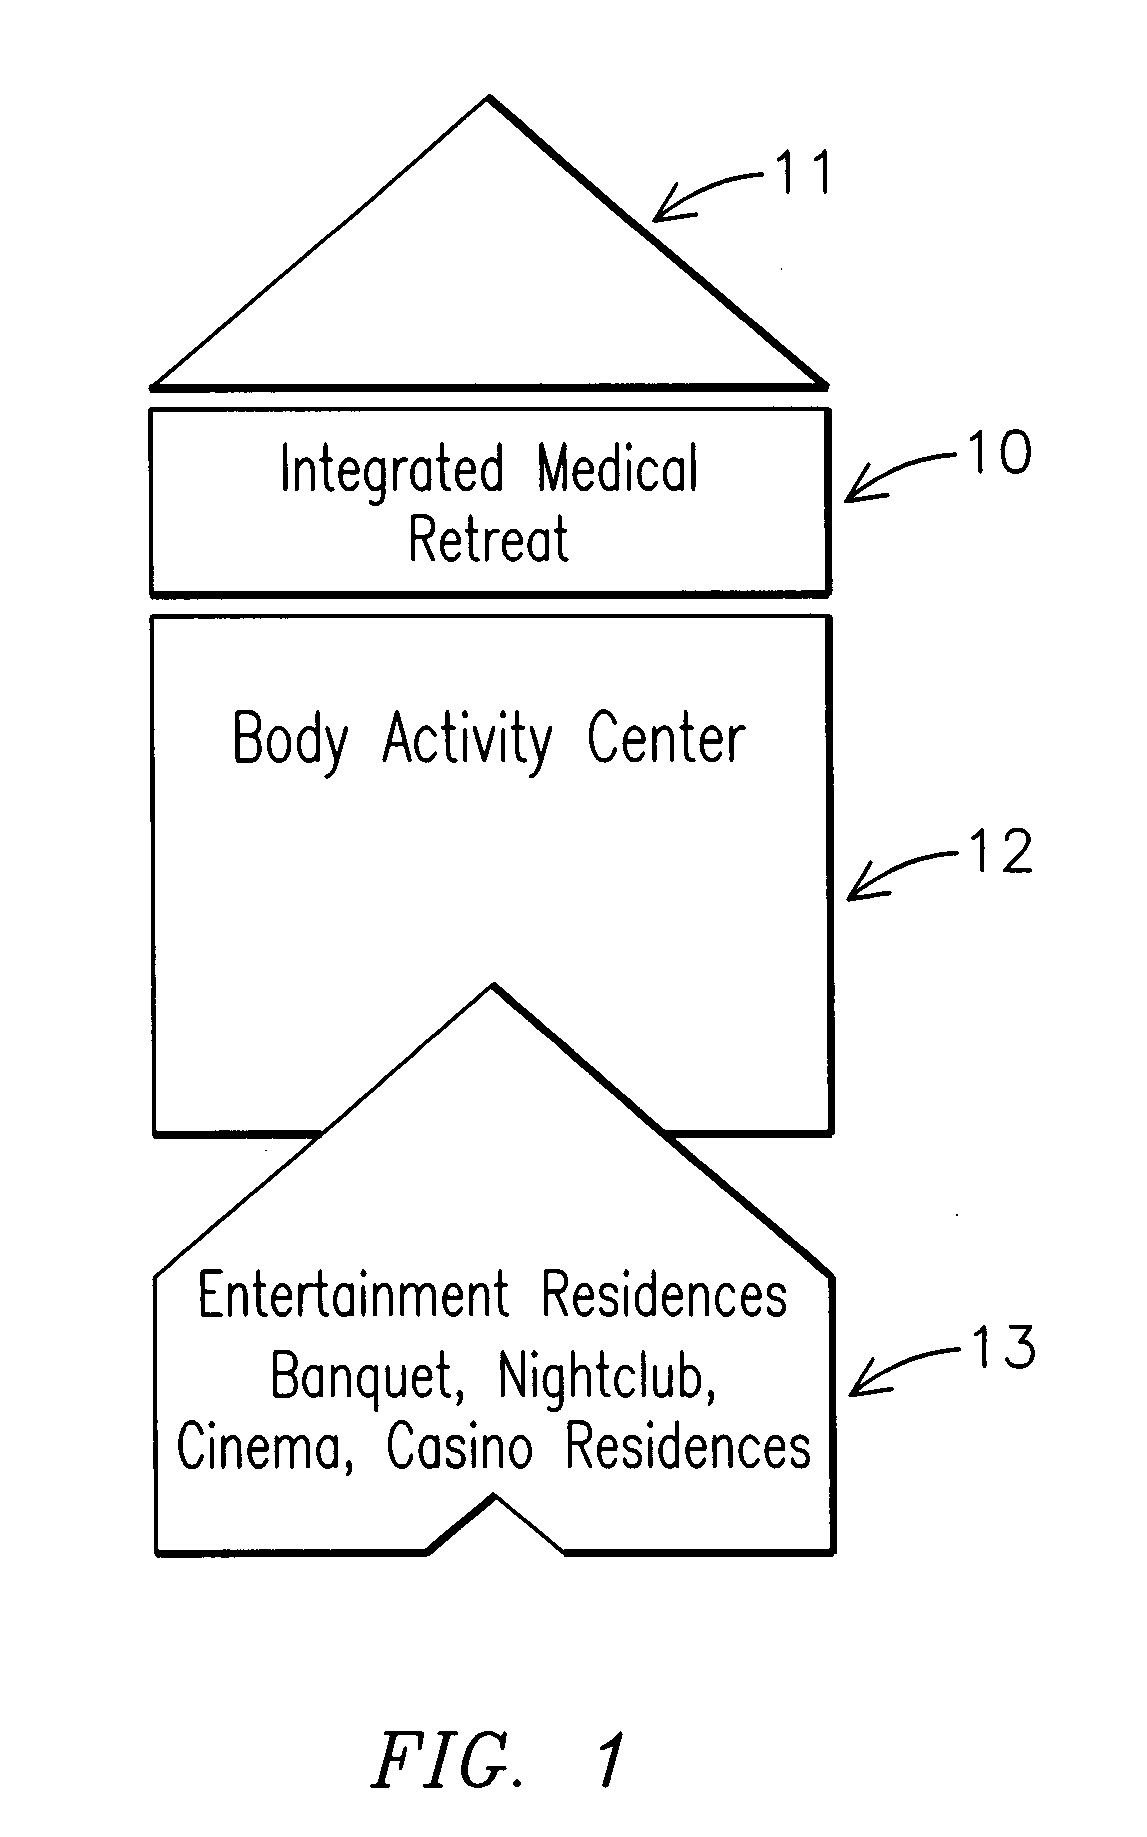 Integrated owner-member medical retreat method & system